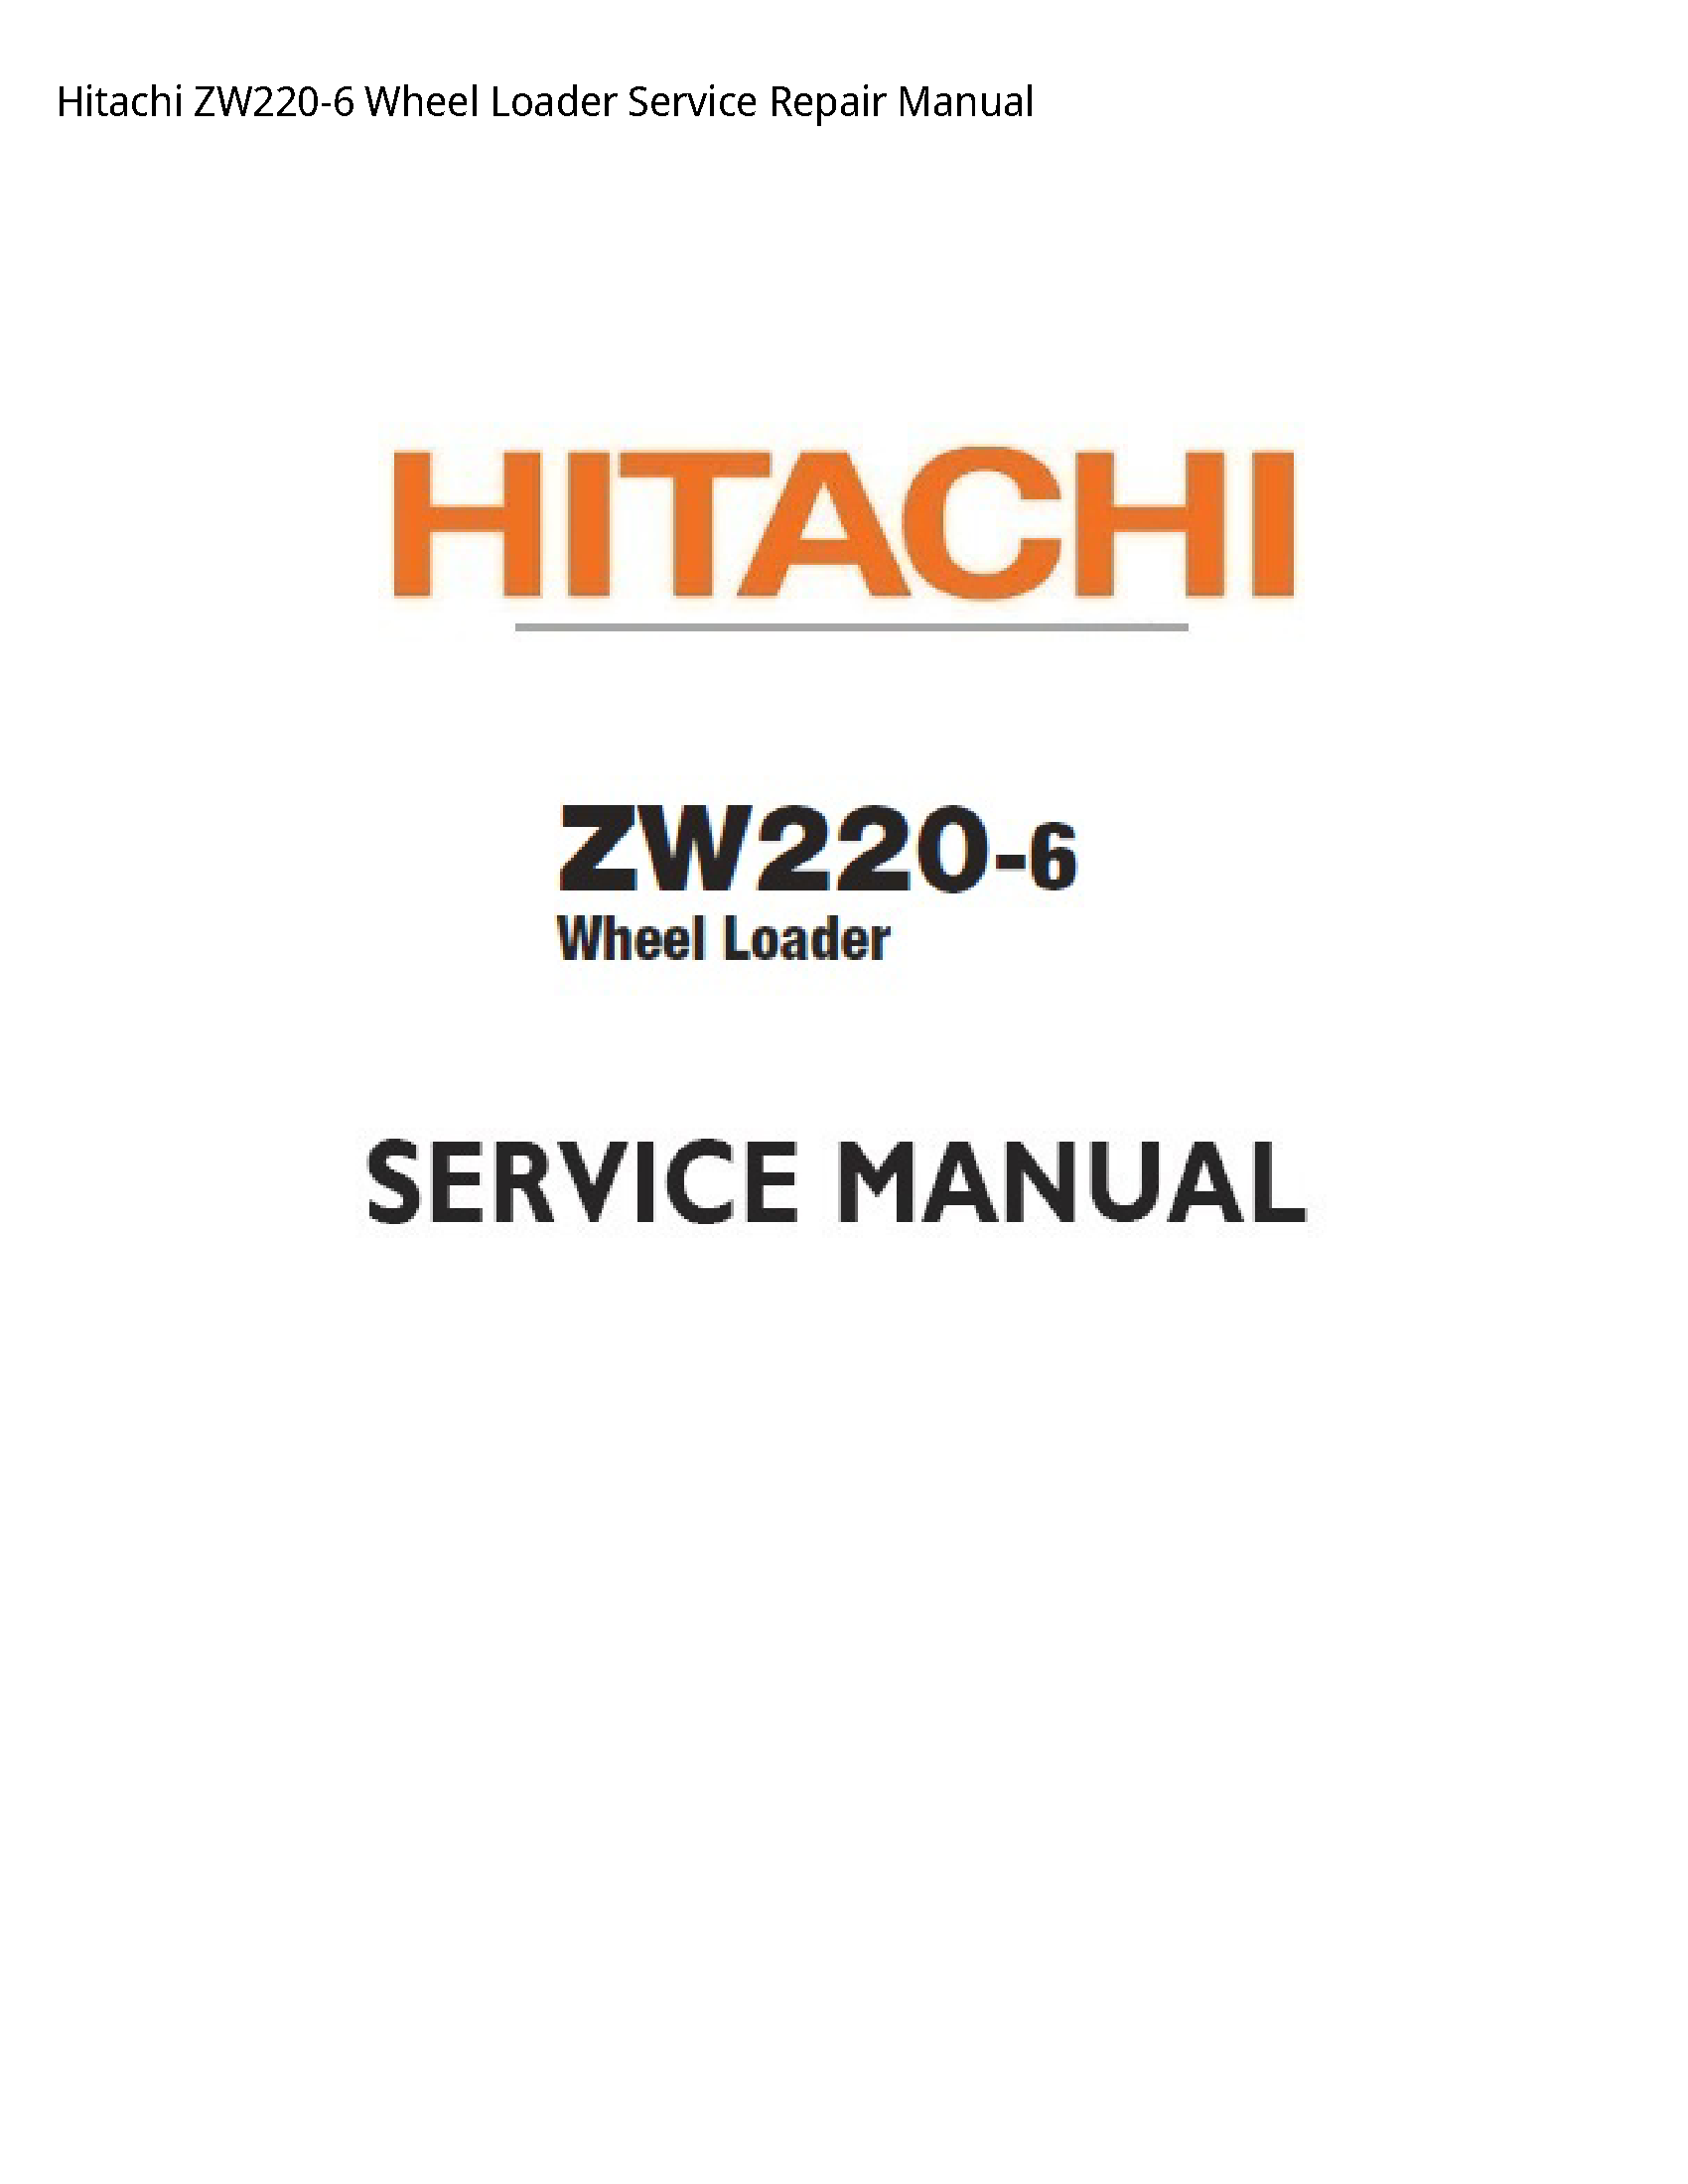 Hitachi ZW220-6 Wheel Loader manual